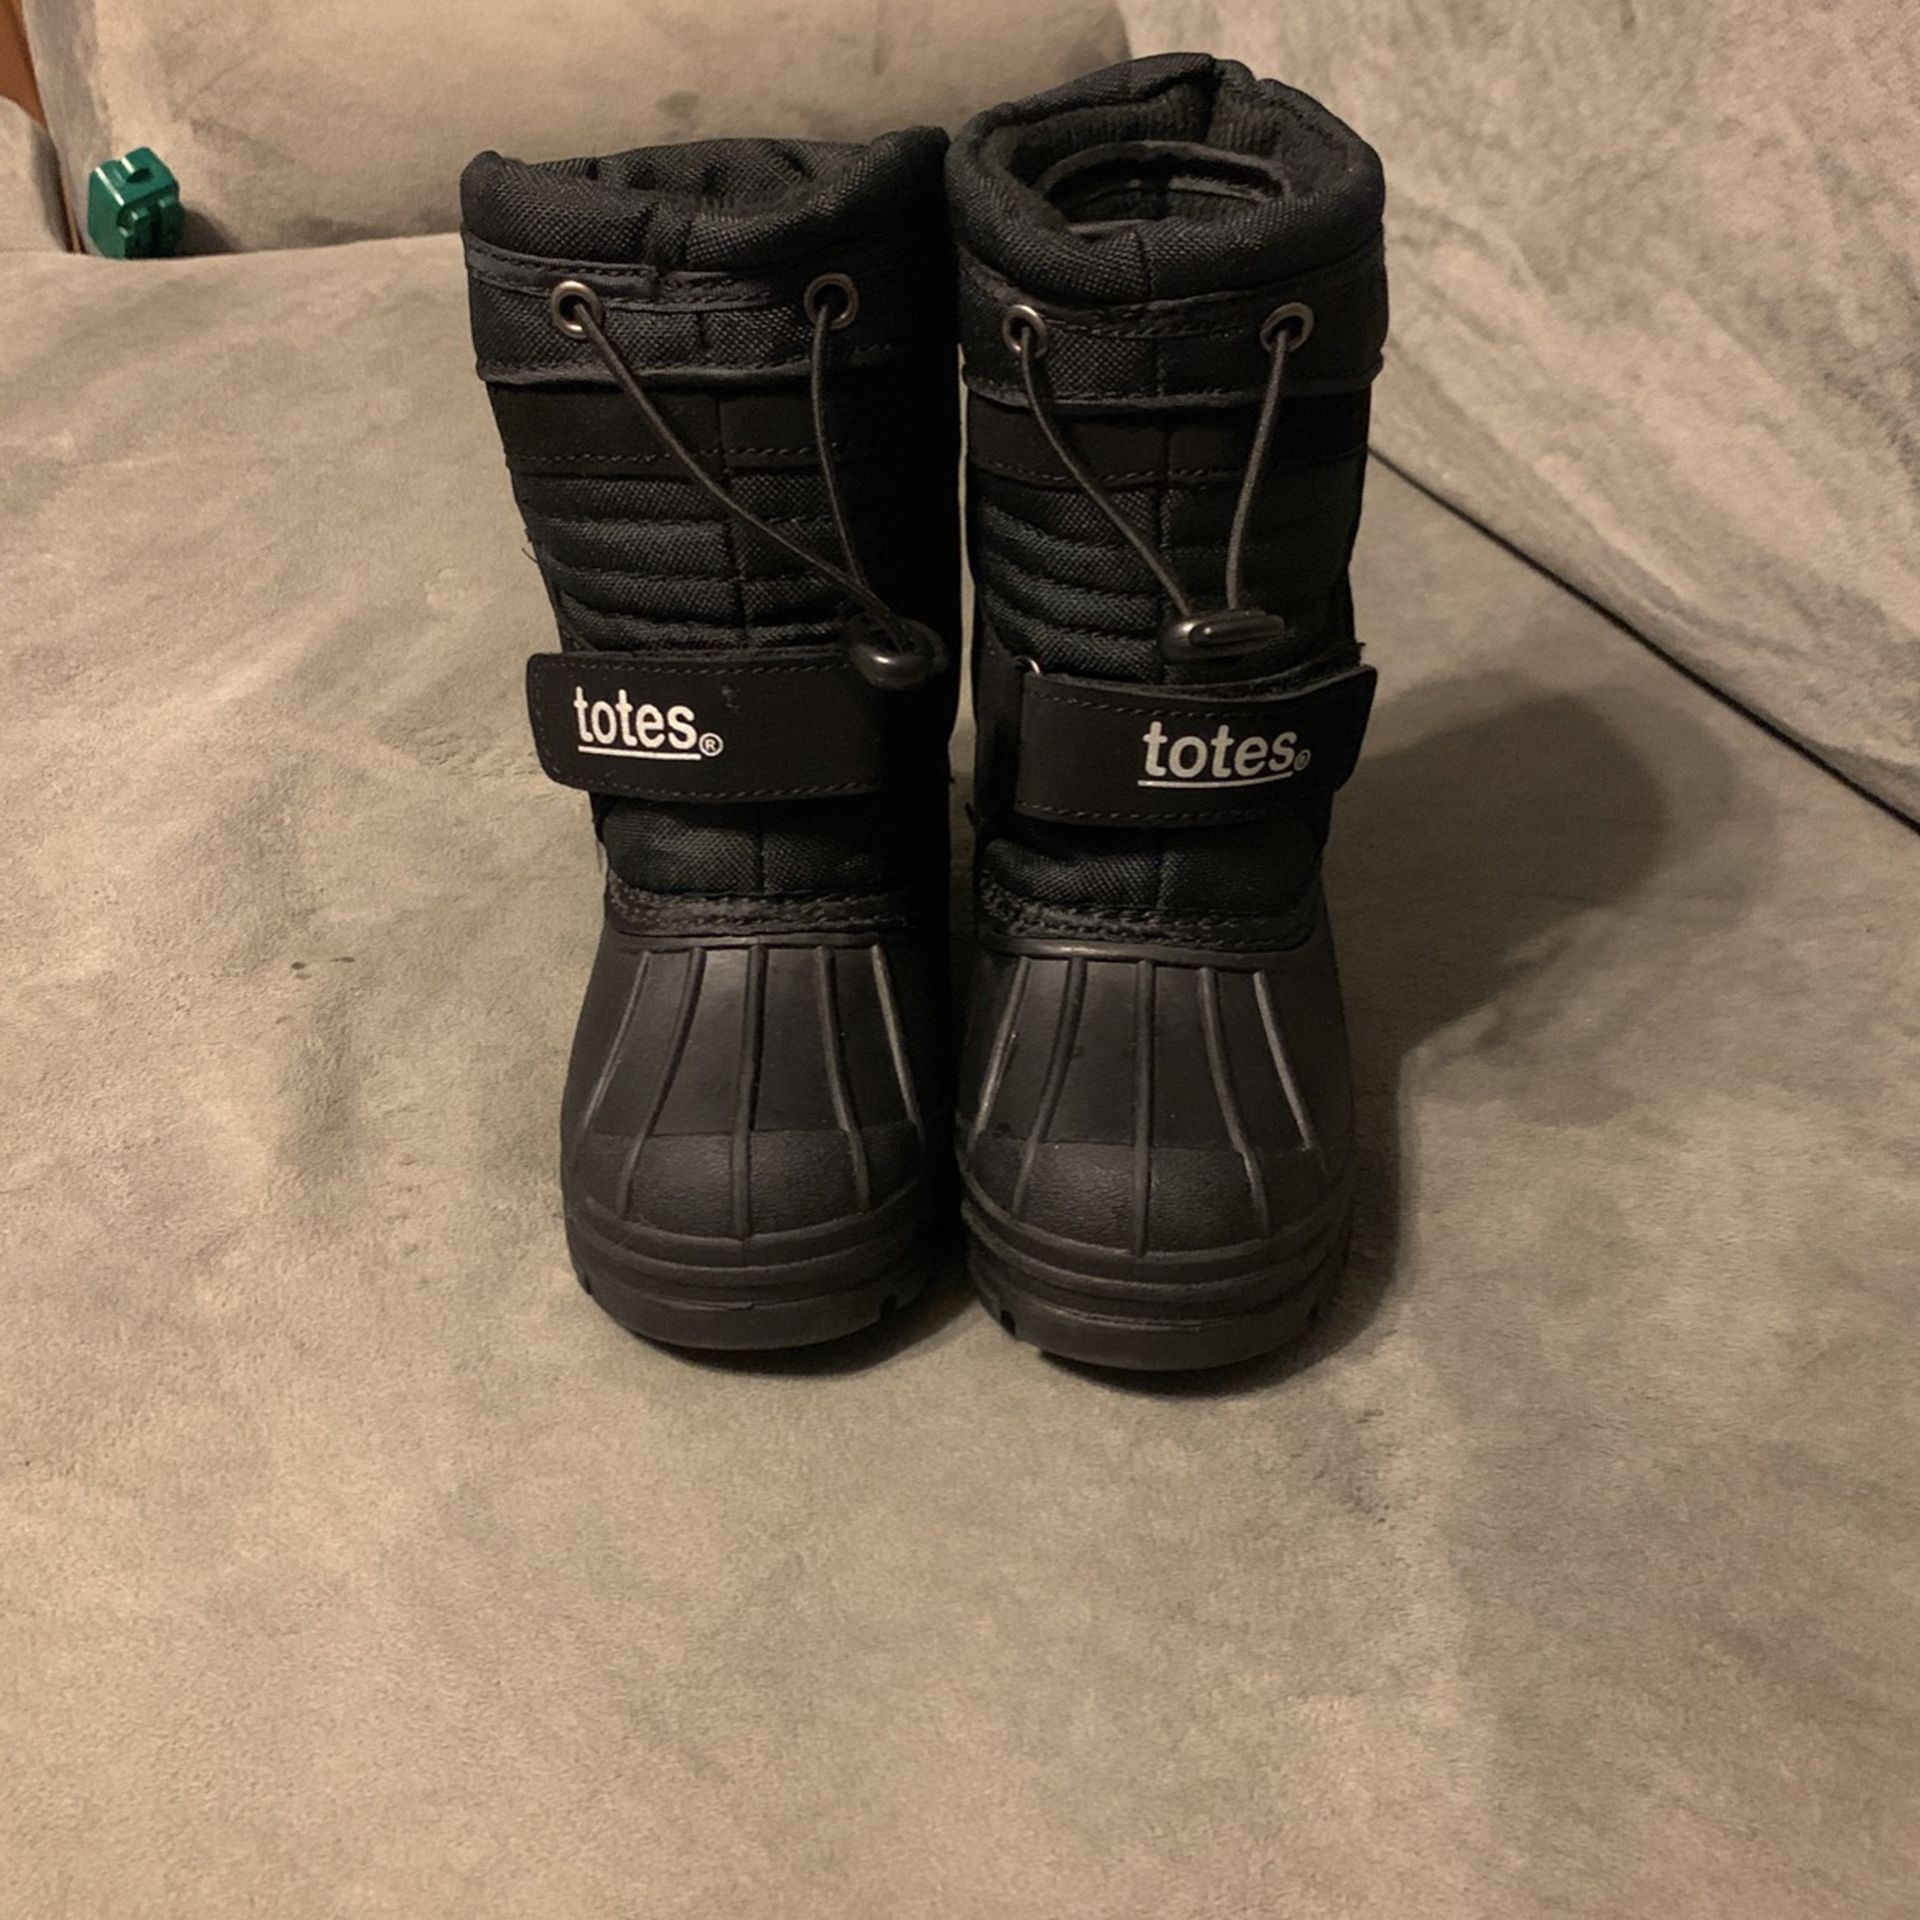 Totes Snow Boots, Black, 8c